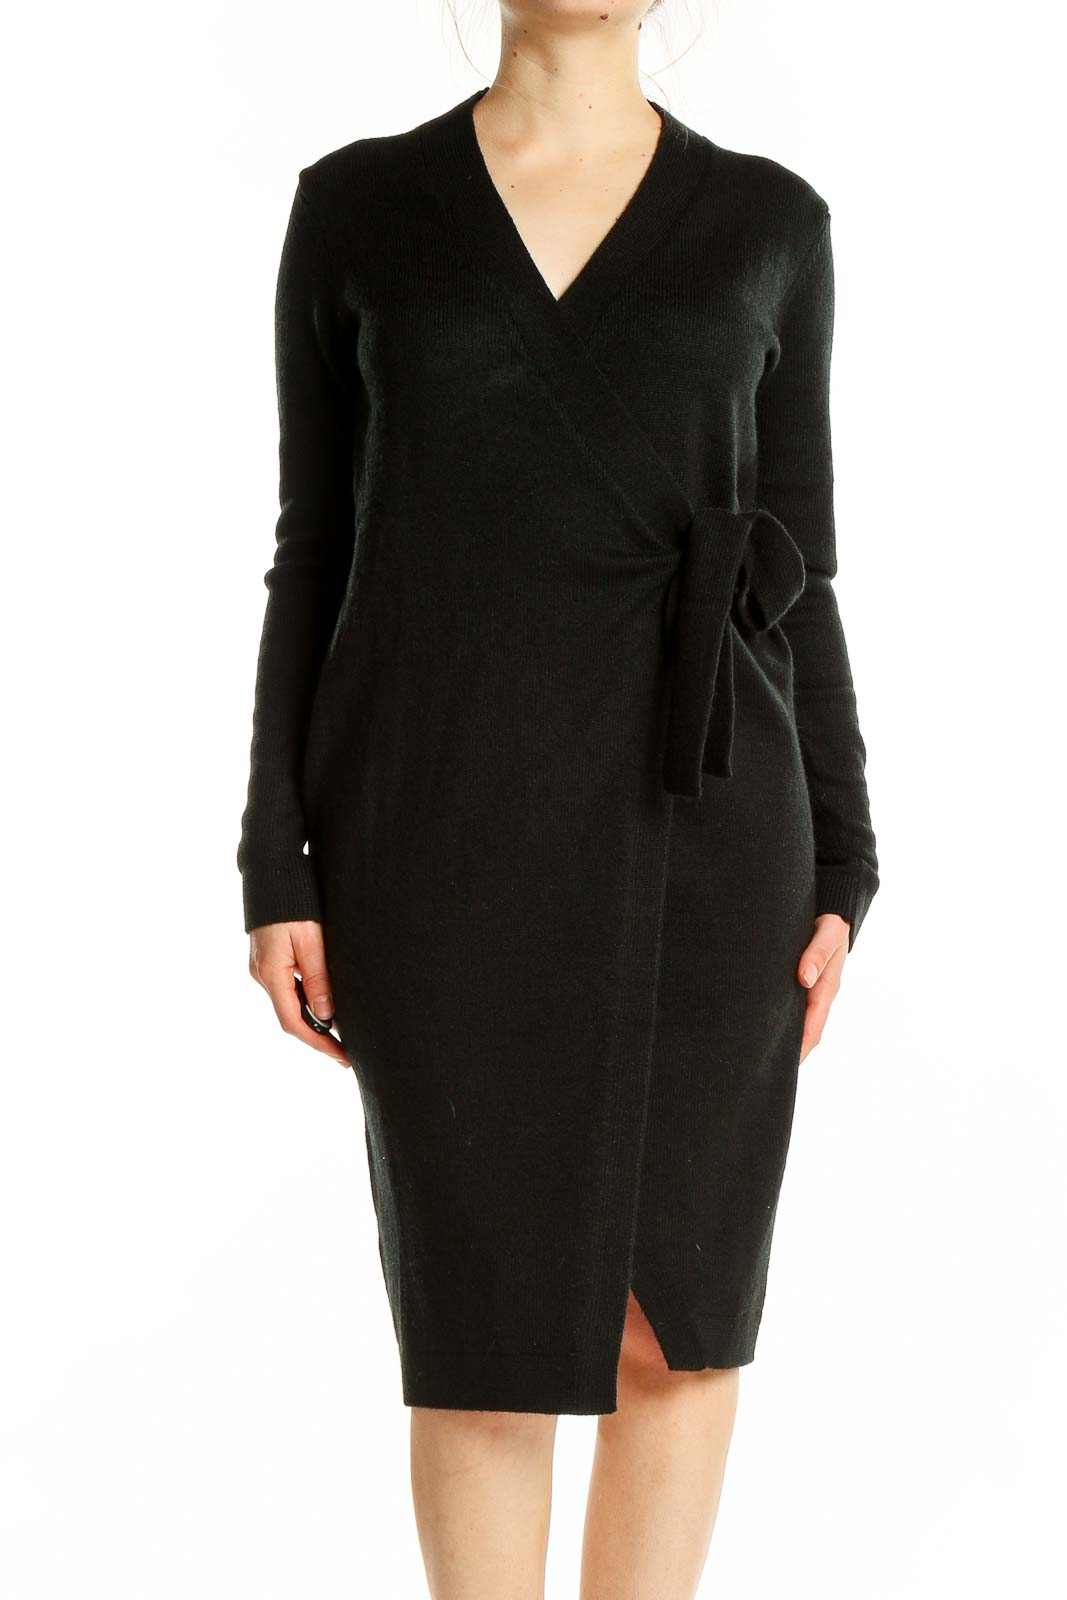 Black Long Sleeve Knit Wrap Dress Front